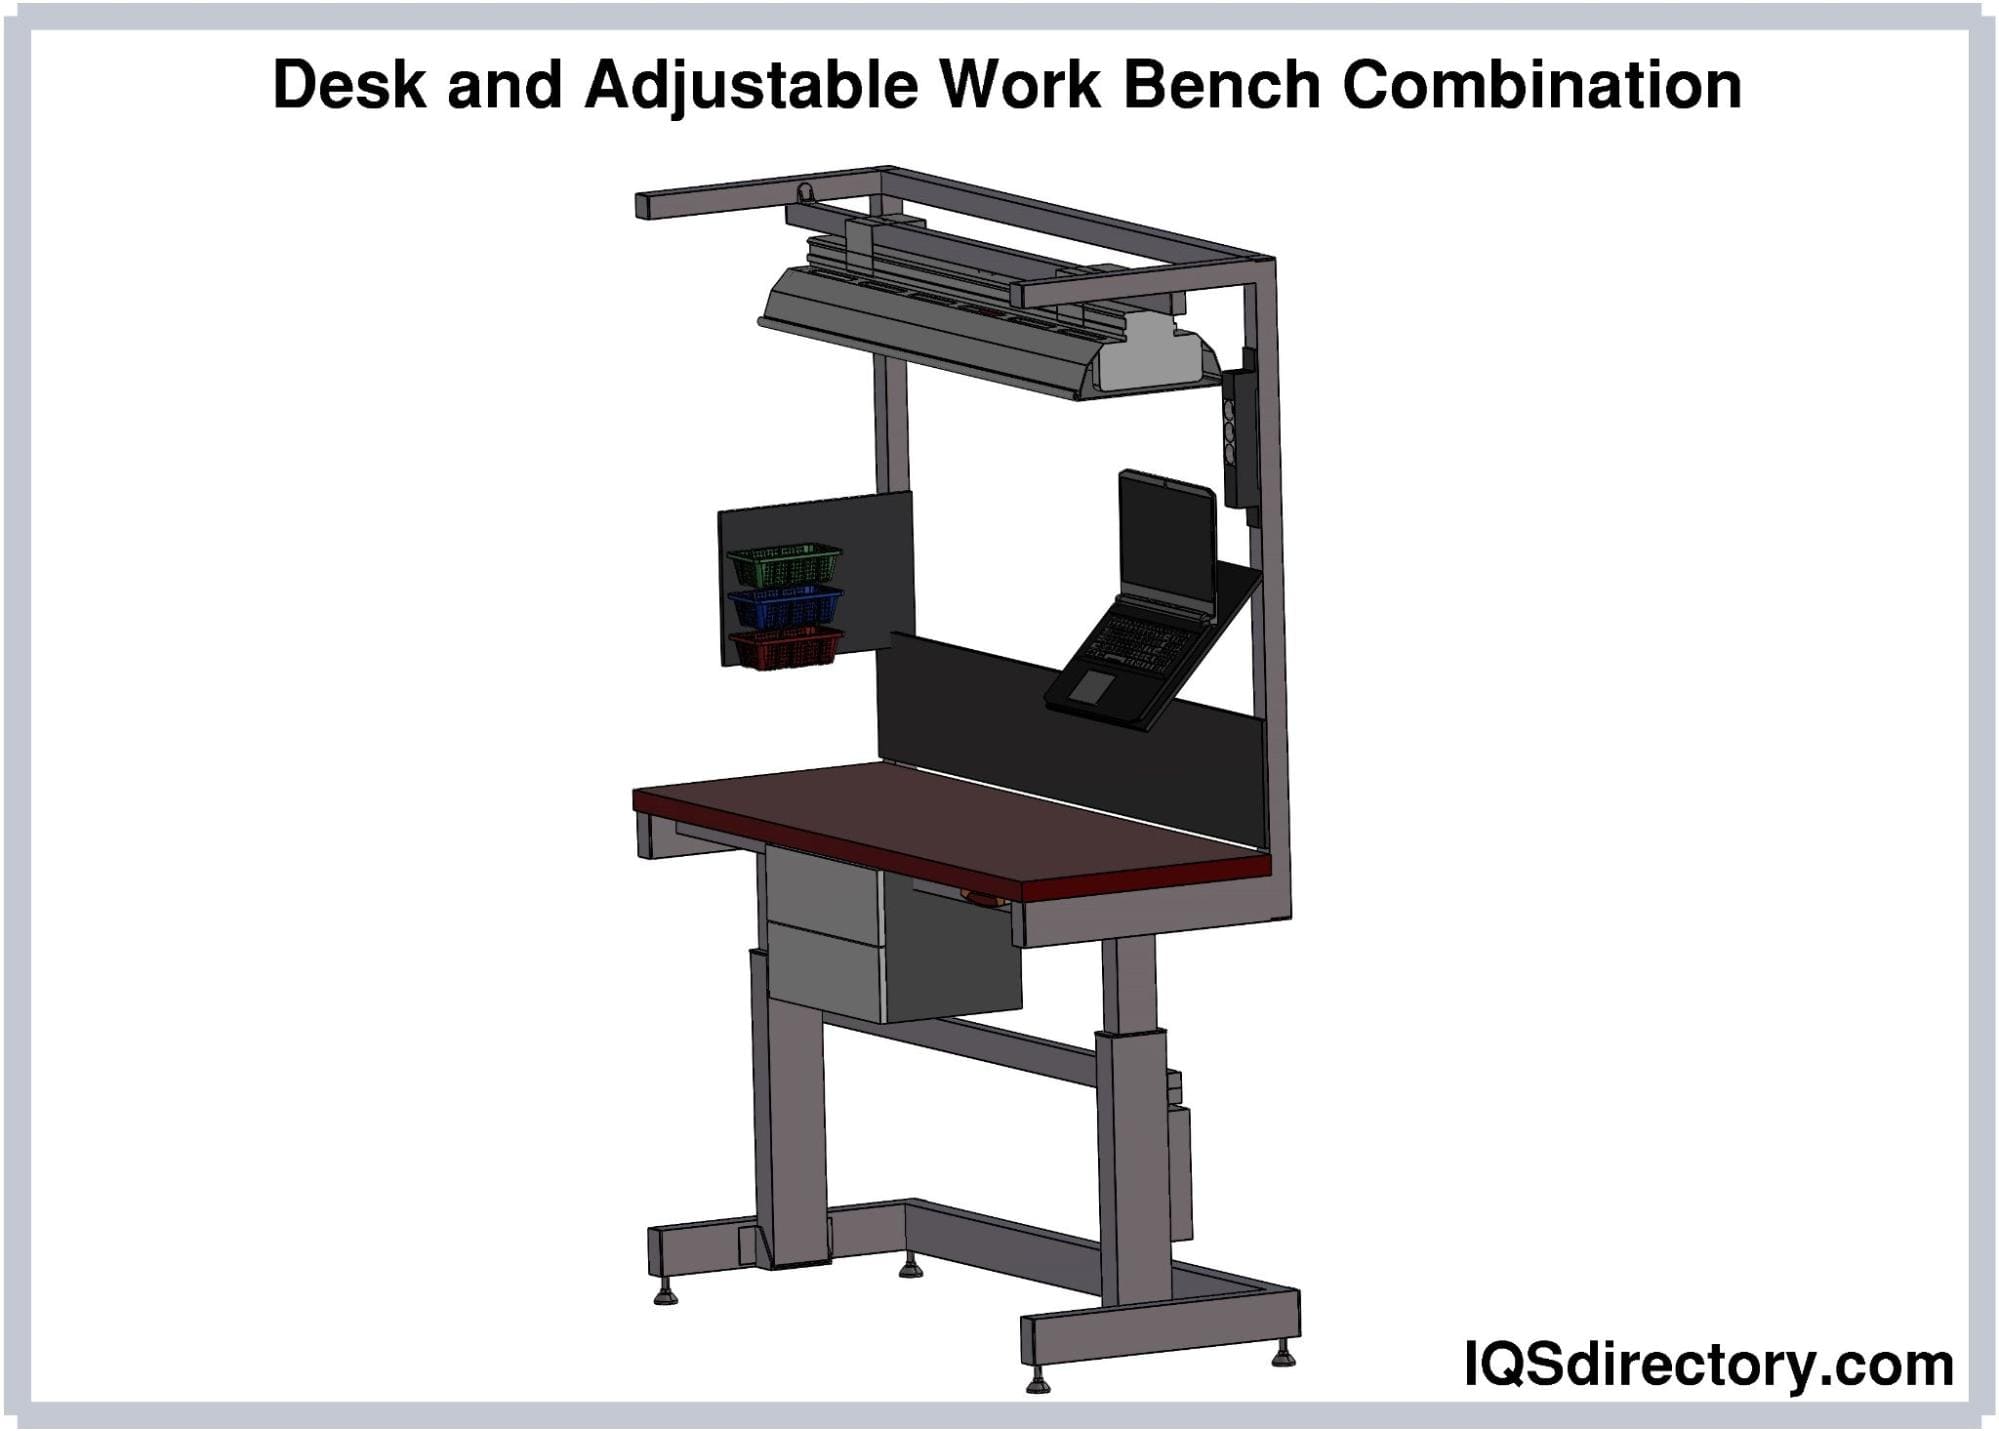 Desk and Adjustable Work Bench Combination